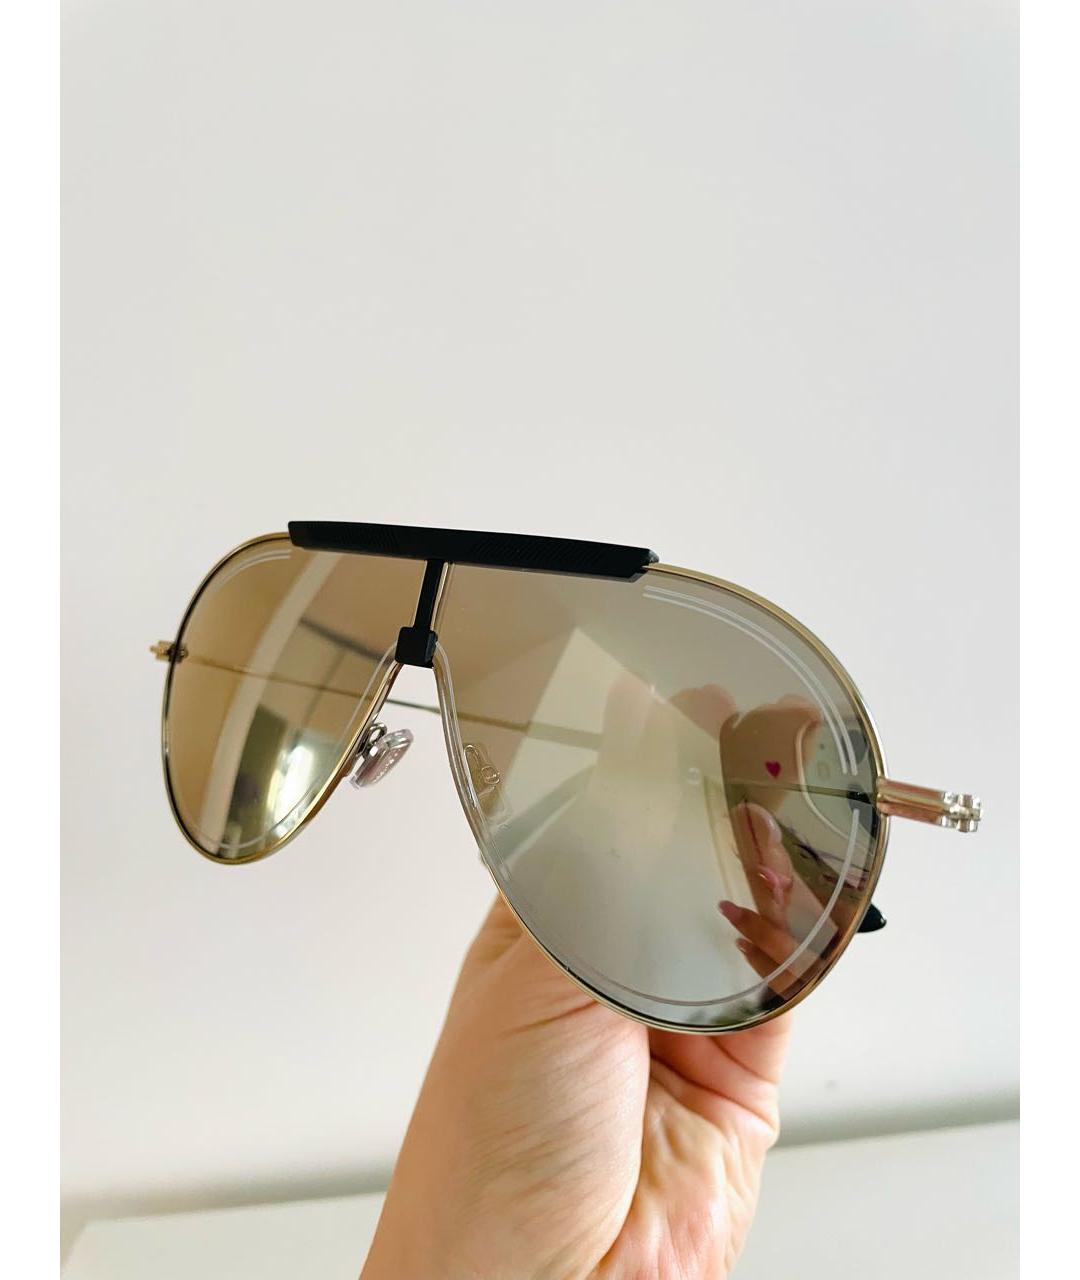 JIMMY CHOO Золотые металлические солнцезащитные очки, фото 6